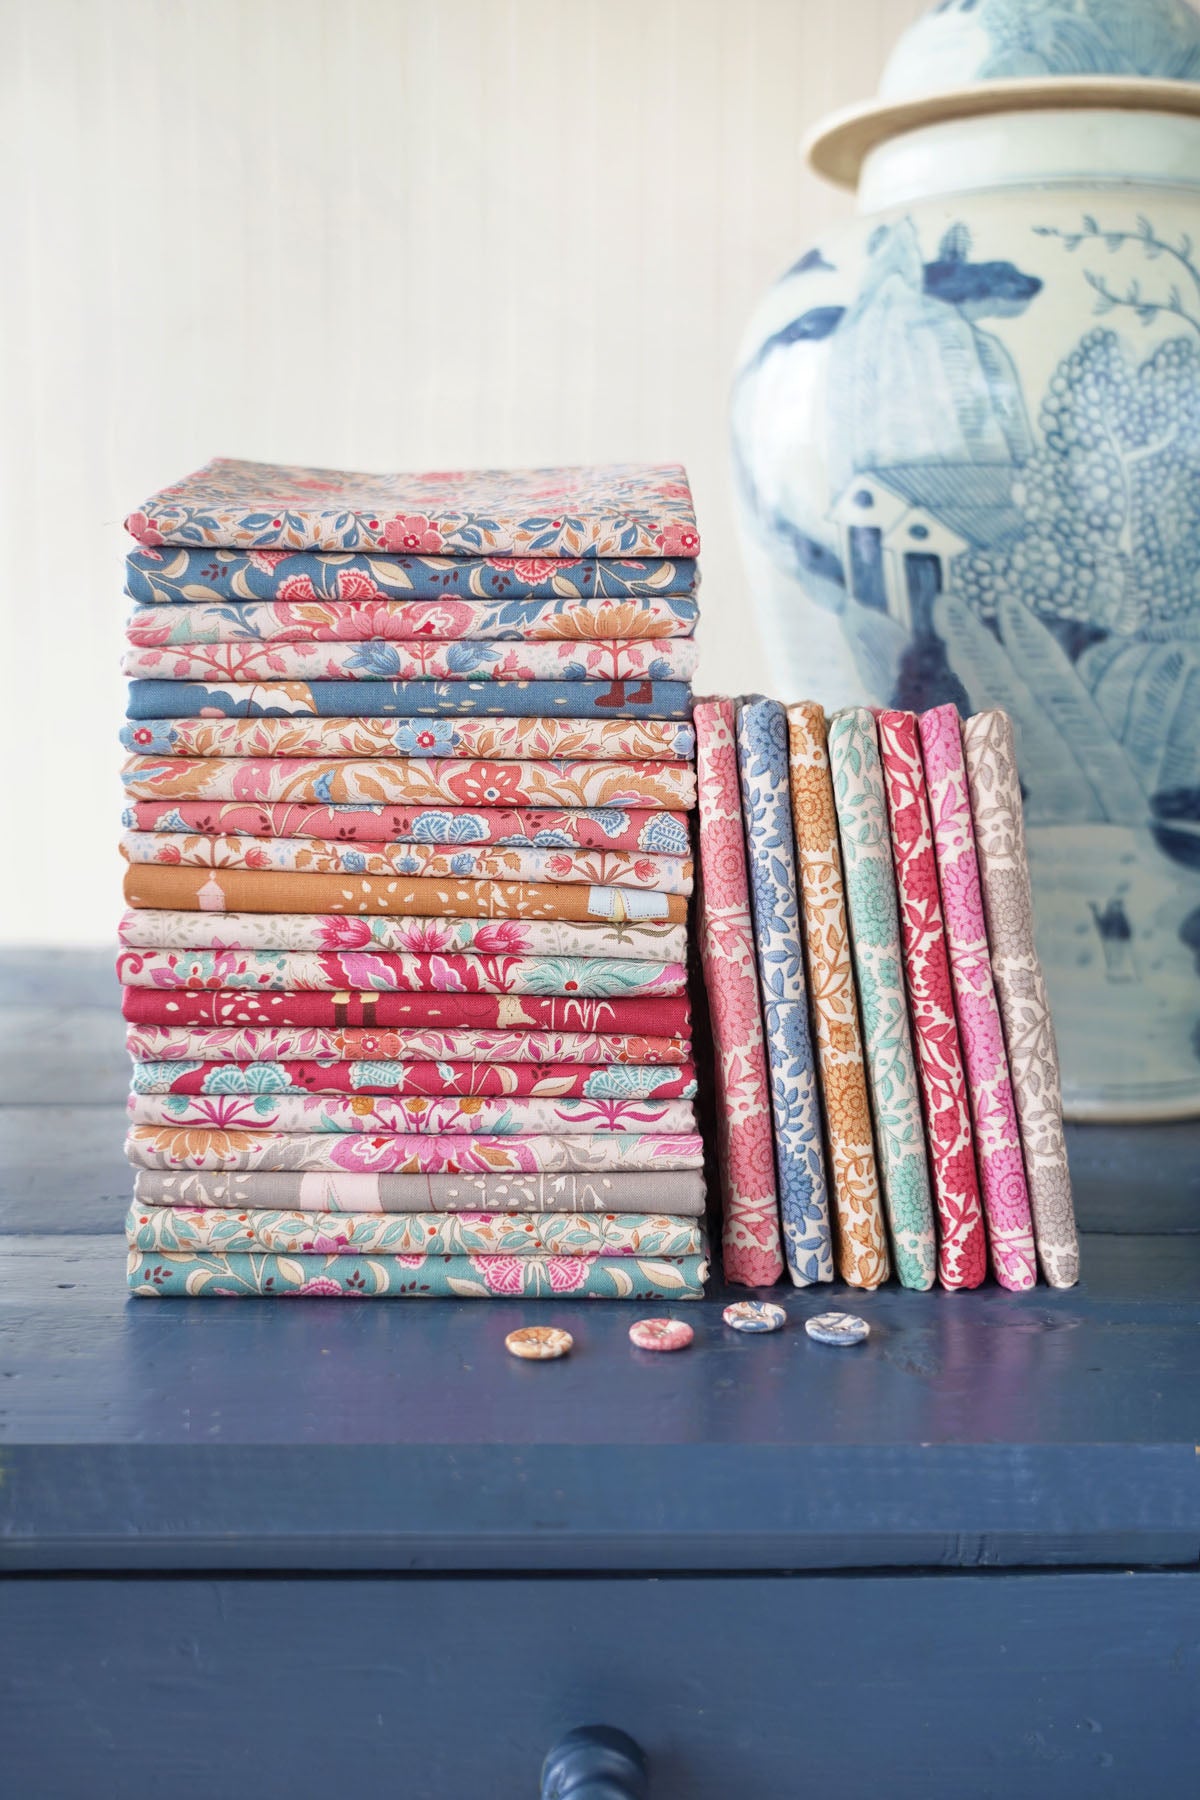 Windy Days Collection Fat Quarter Bundle by Tilda fabrics | TIL300118